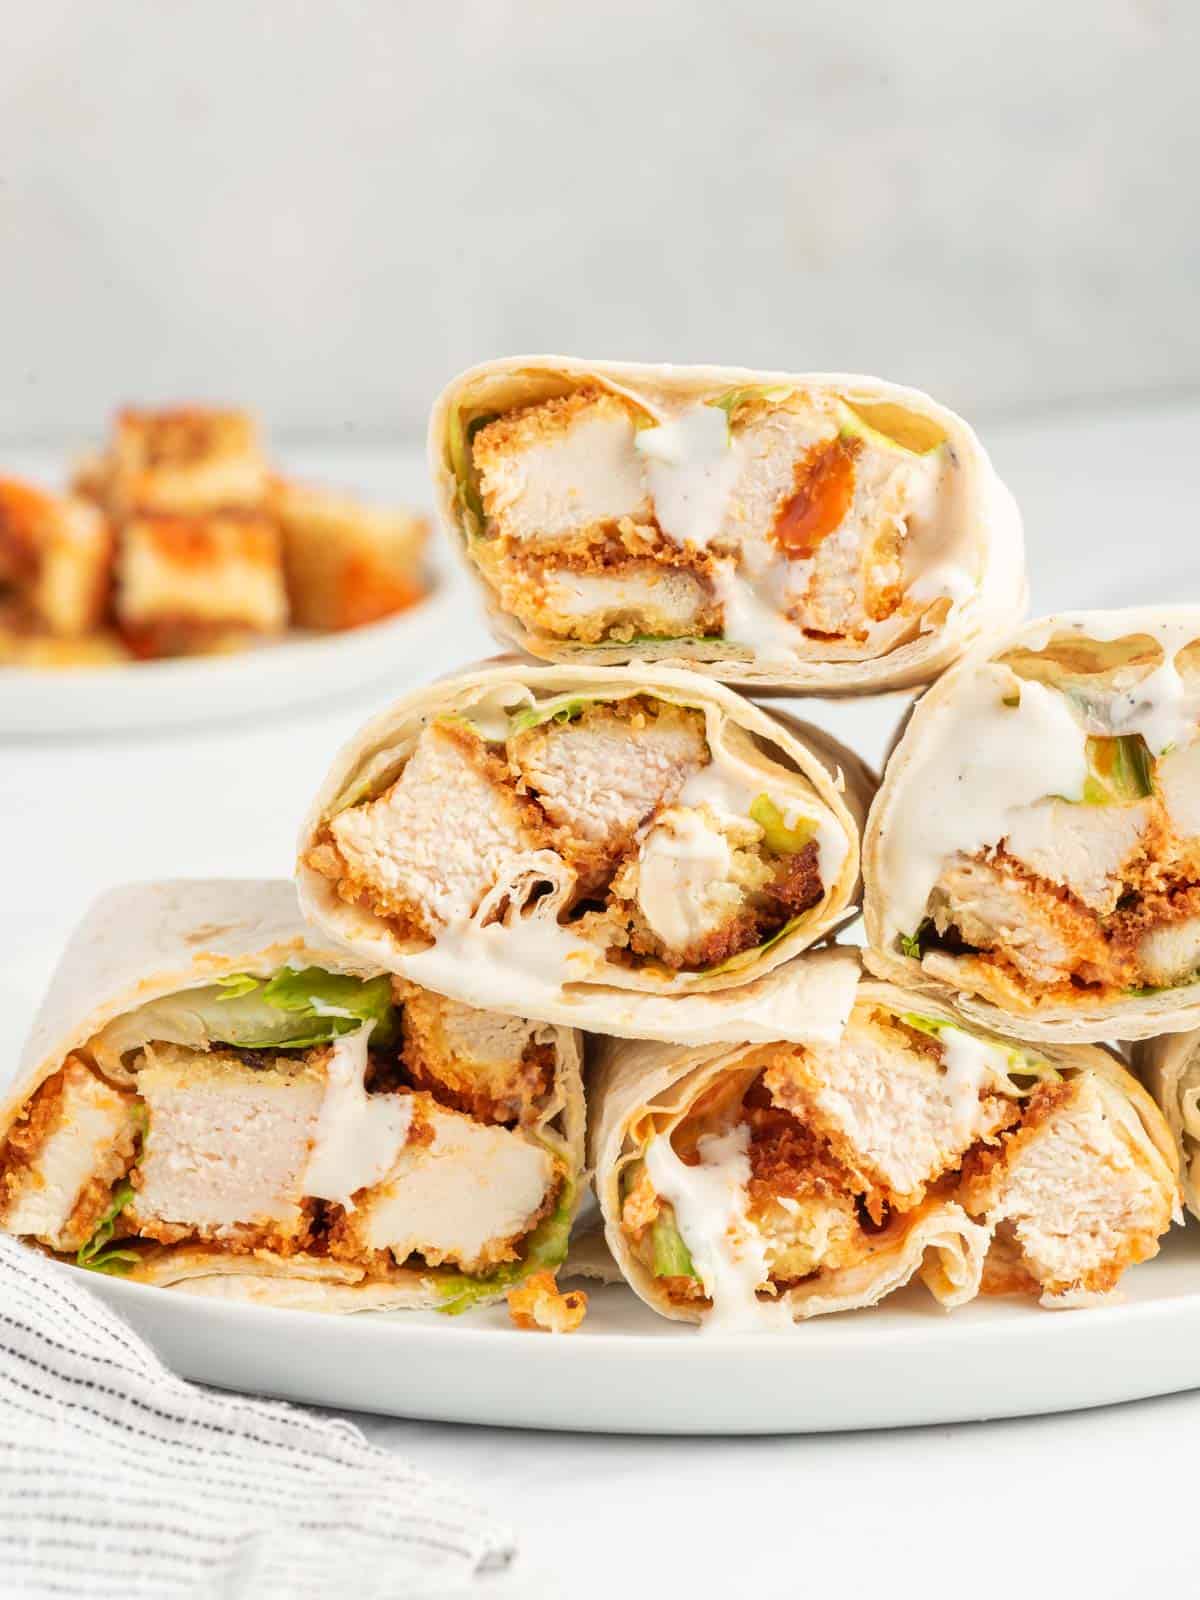 A platter of spicy chicken wrap sandwiches.